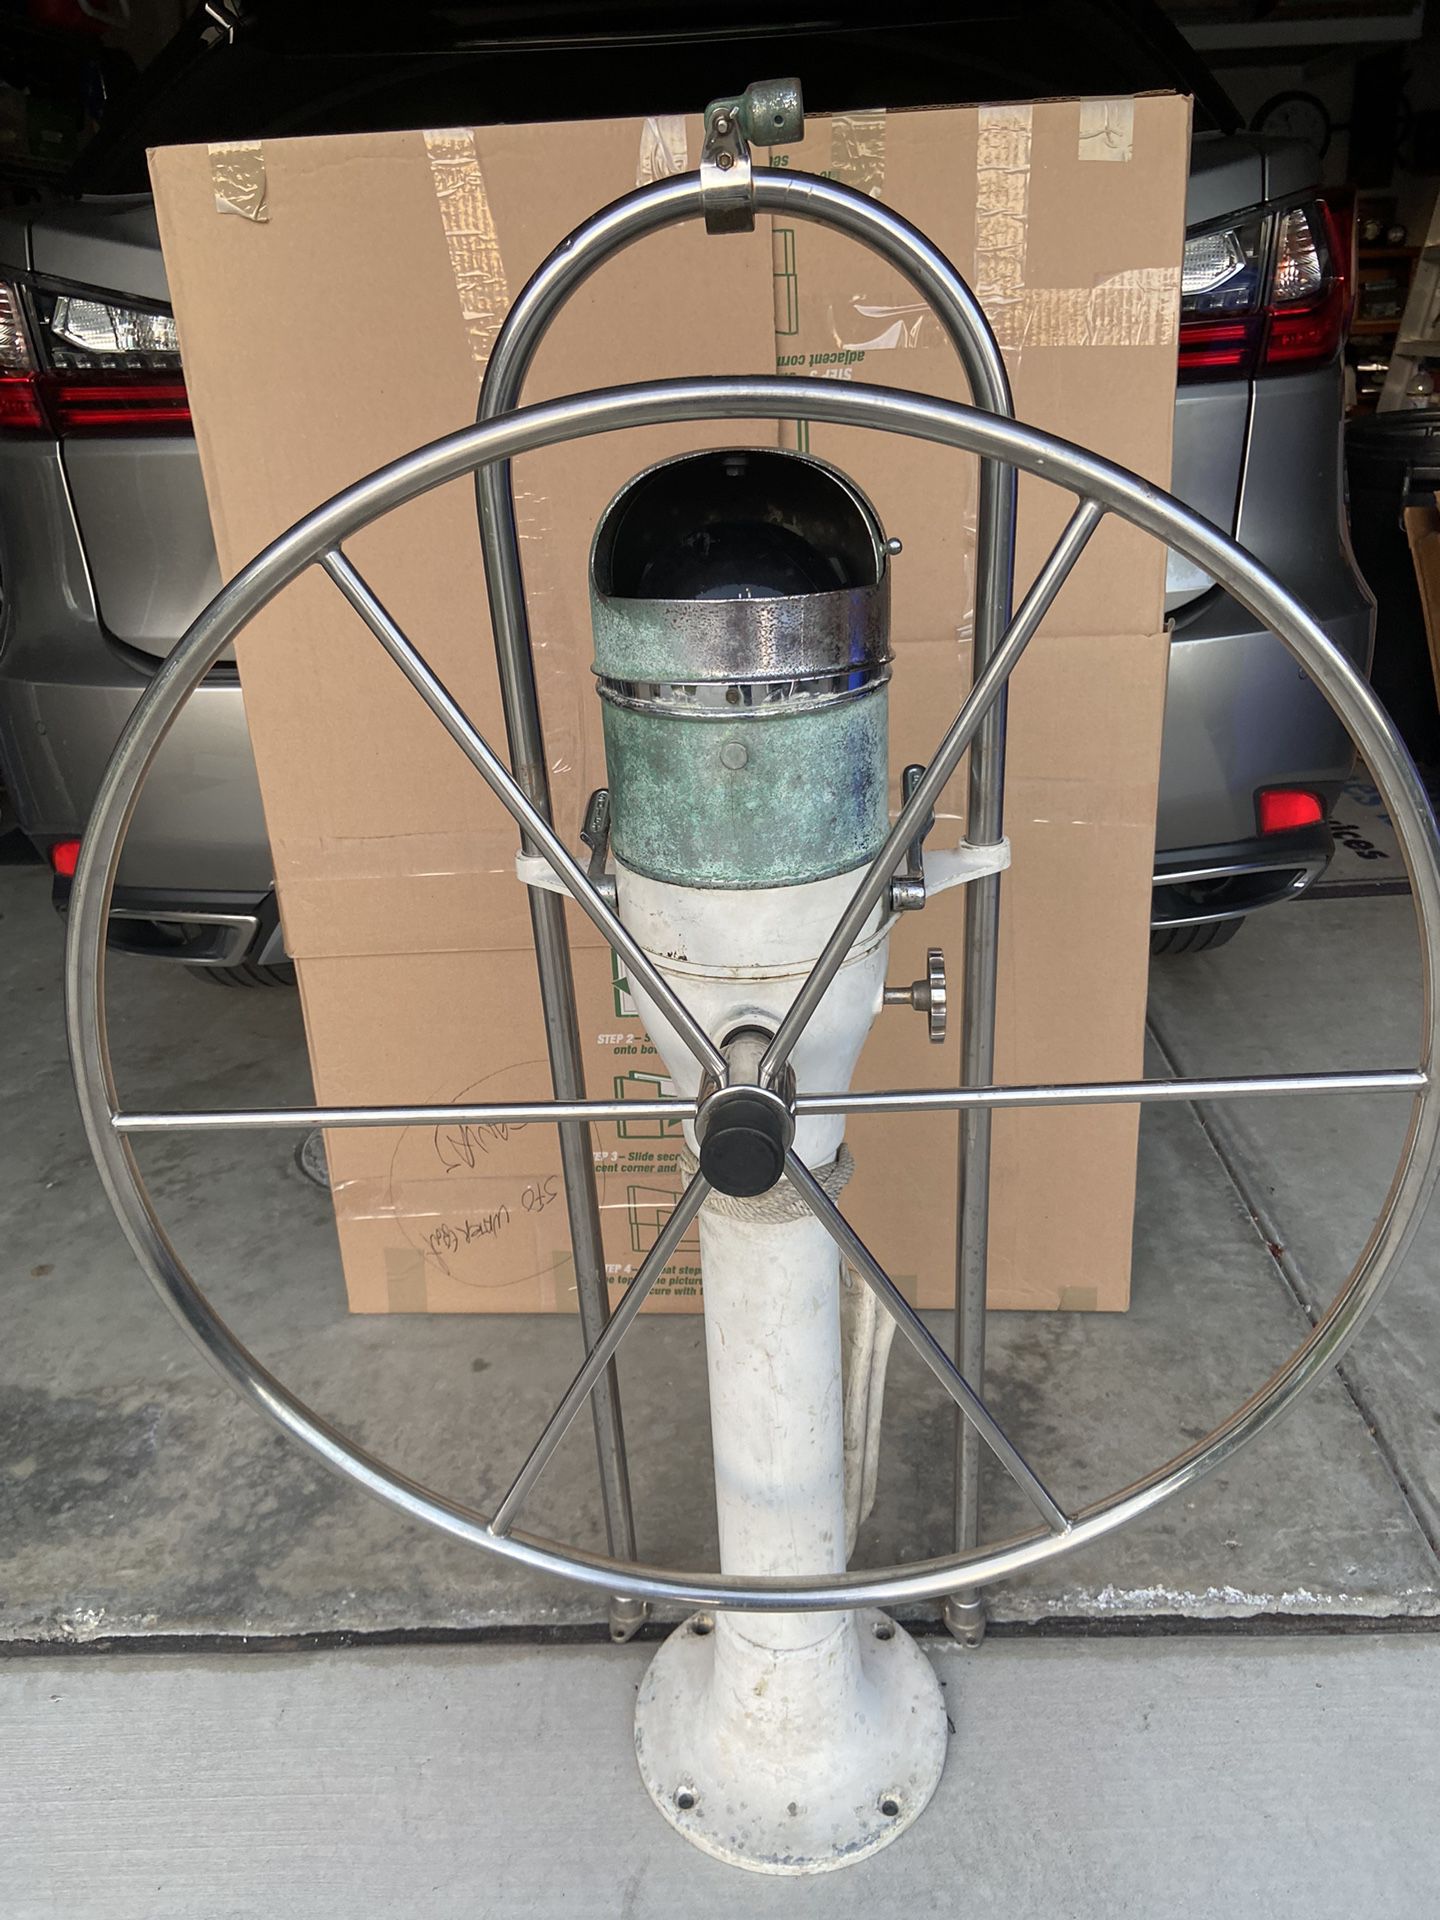 Sailboat Wheel, Pedistal, And Working Compass